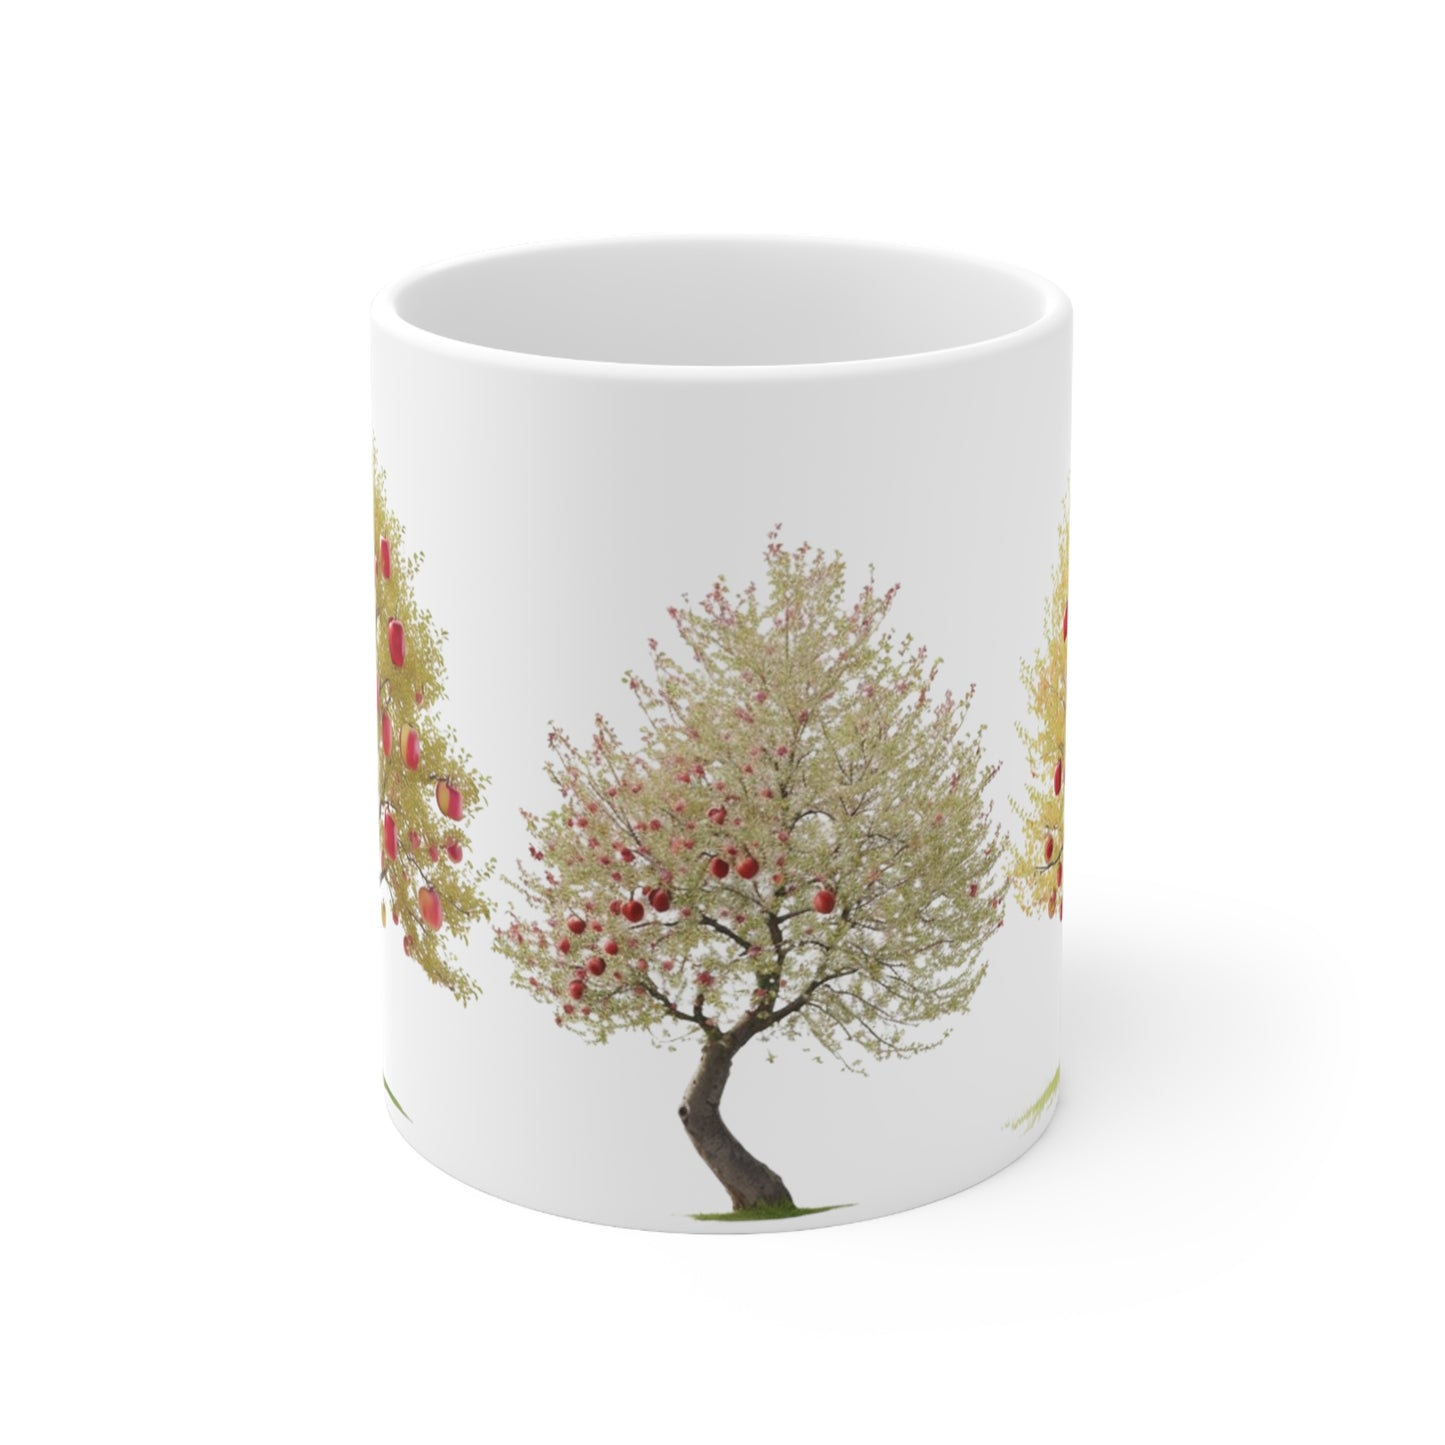 Apple Trees Mug - Ceramic Coffee Mug 11oz